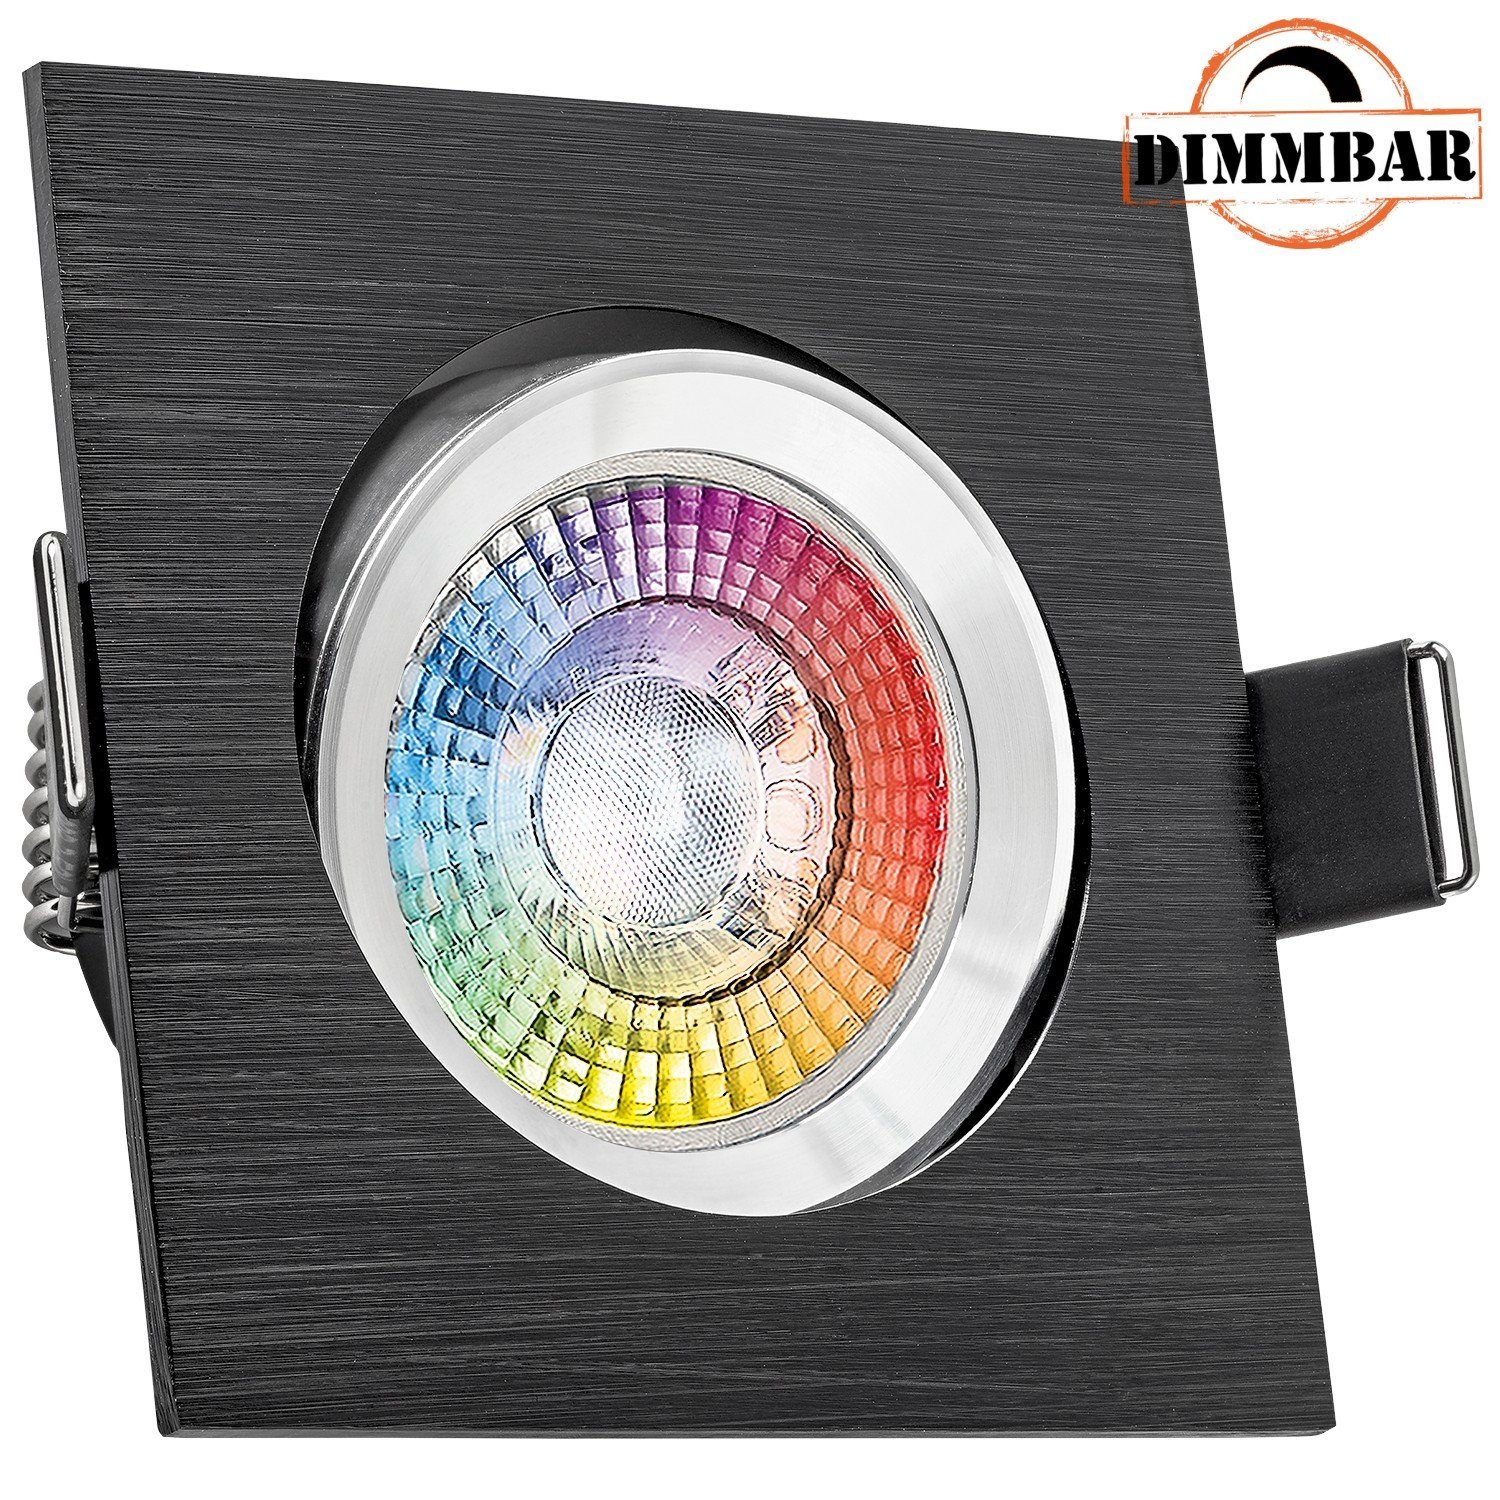 LEDANDO LED Einbaustrahler RGB LED Einbaustrahler Set extra flach in bicolor - zweifarbig mit 3W